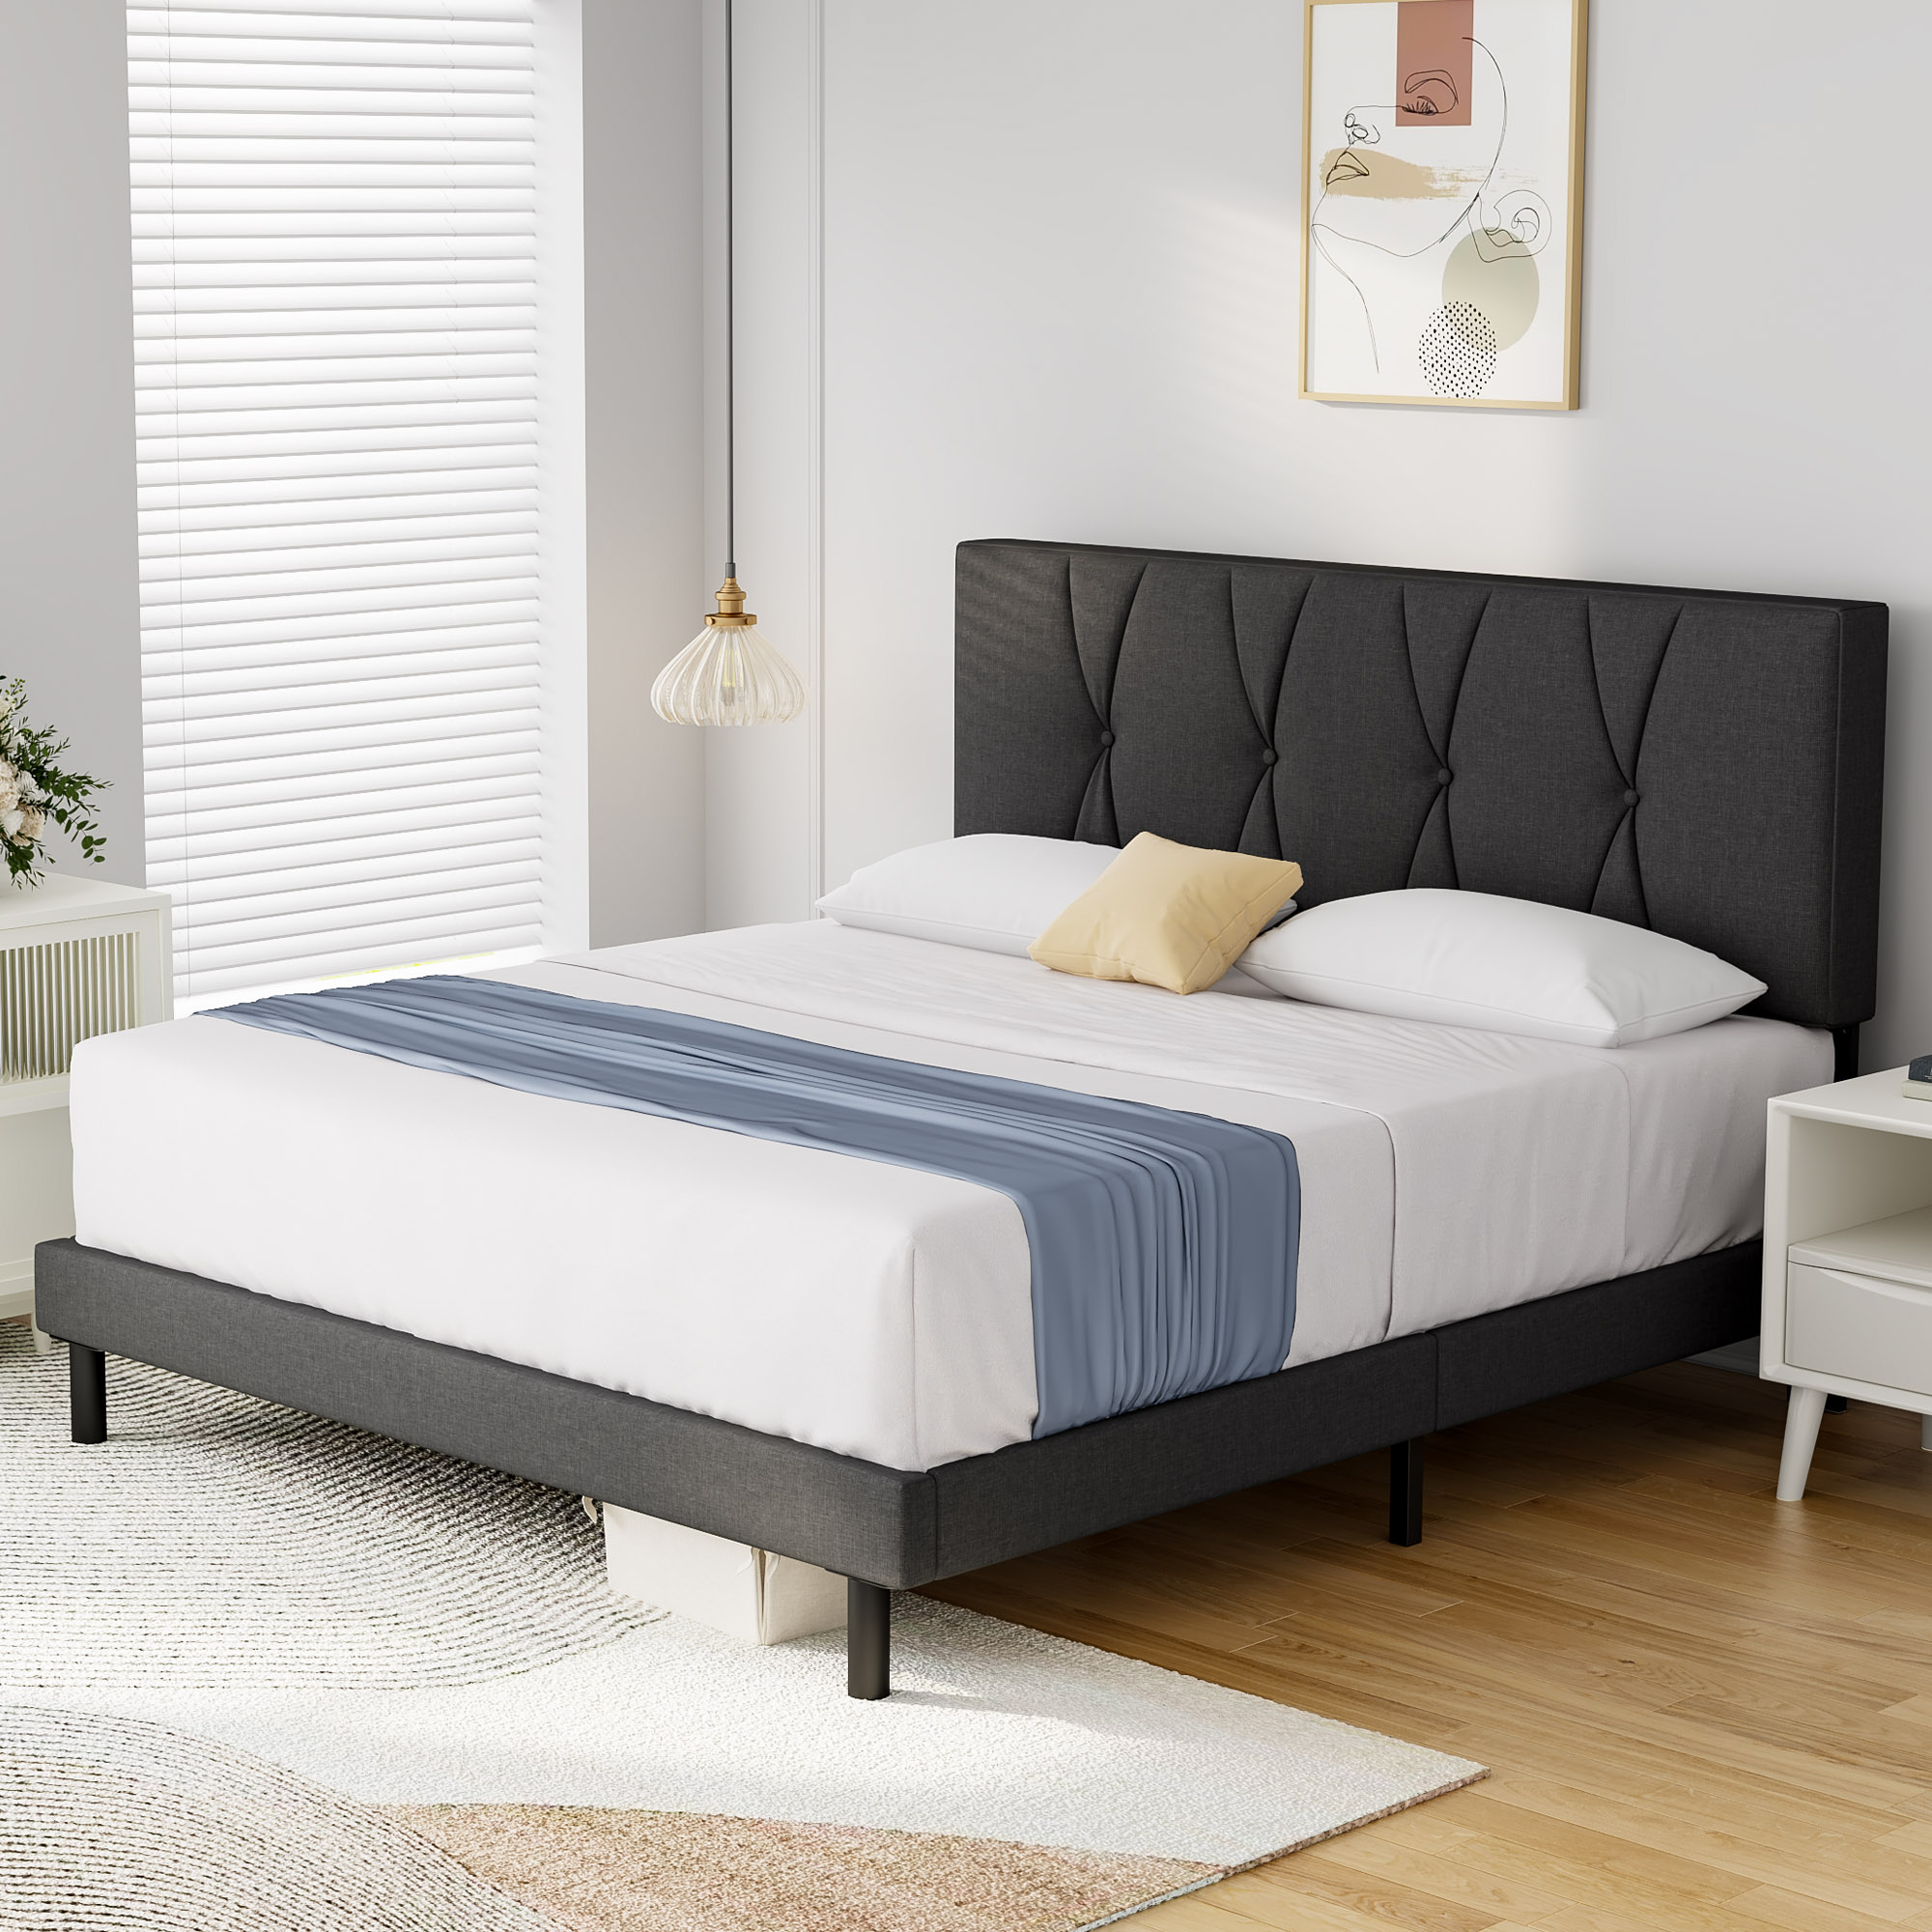 Queen Bed Frame, HAIIDE Queen Size Platform Bed With Fabric Upholstered Headboard, Dark Grey - image 5 of 7